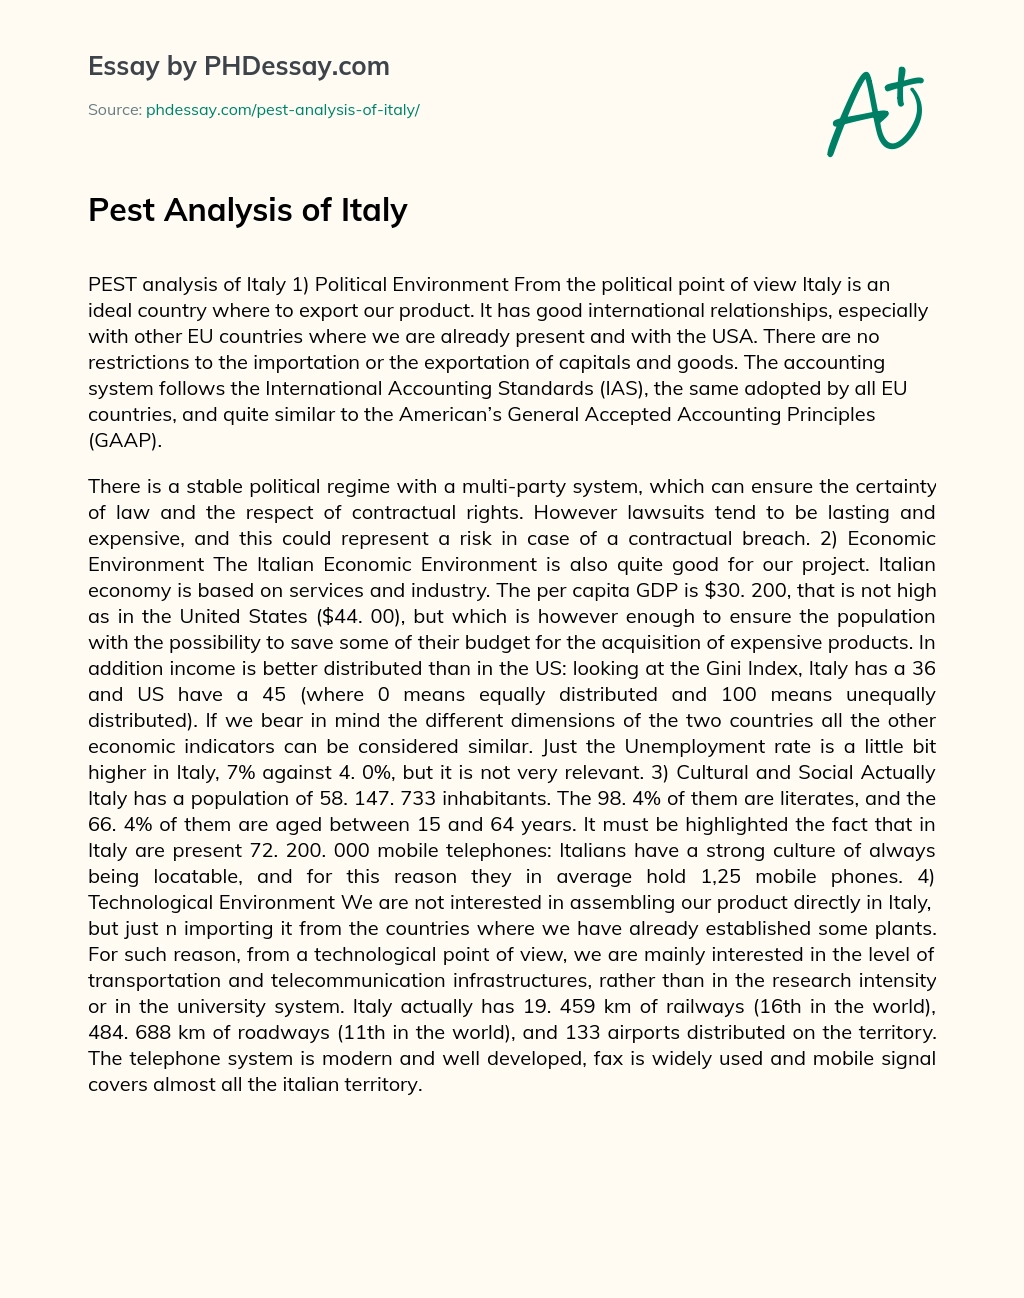 Pest Analysis of Italy essay